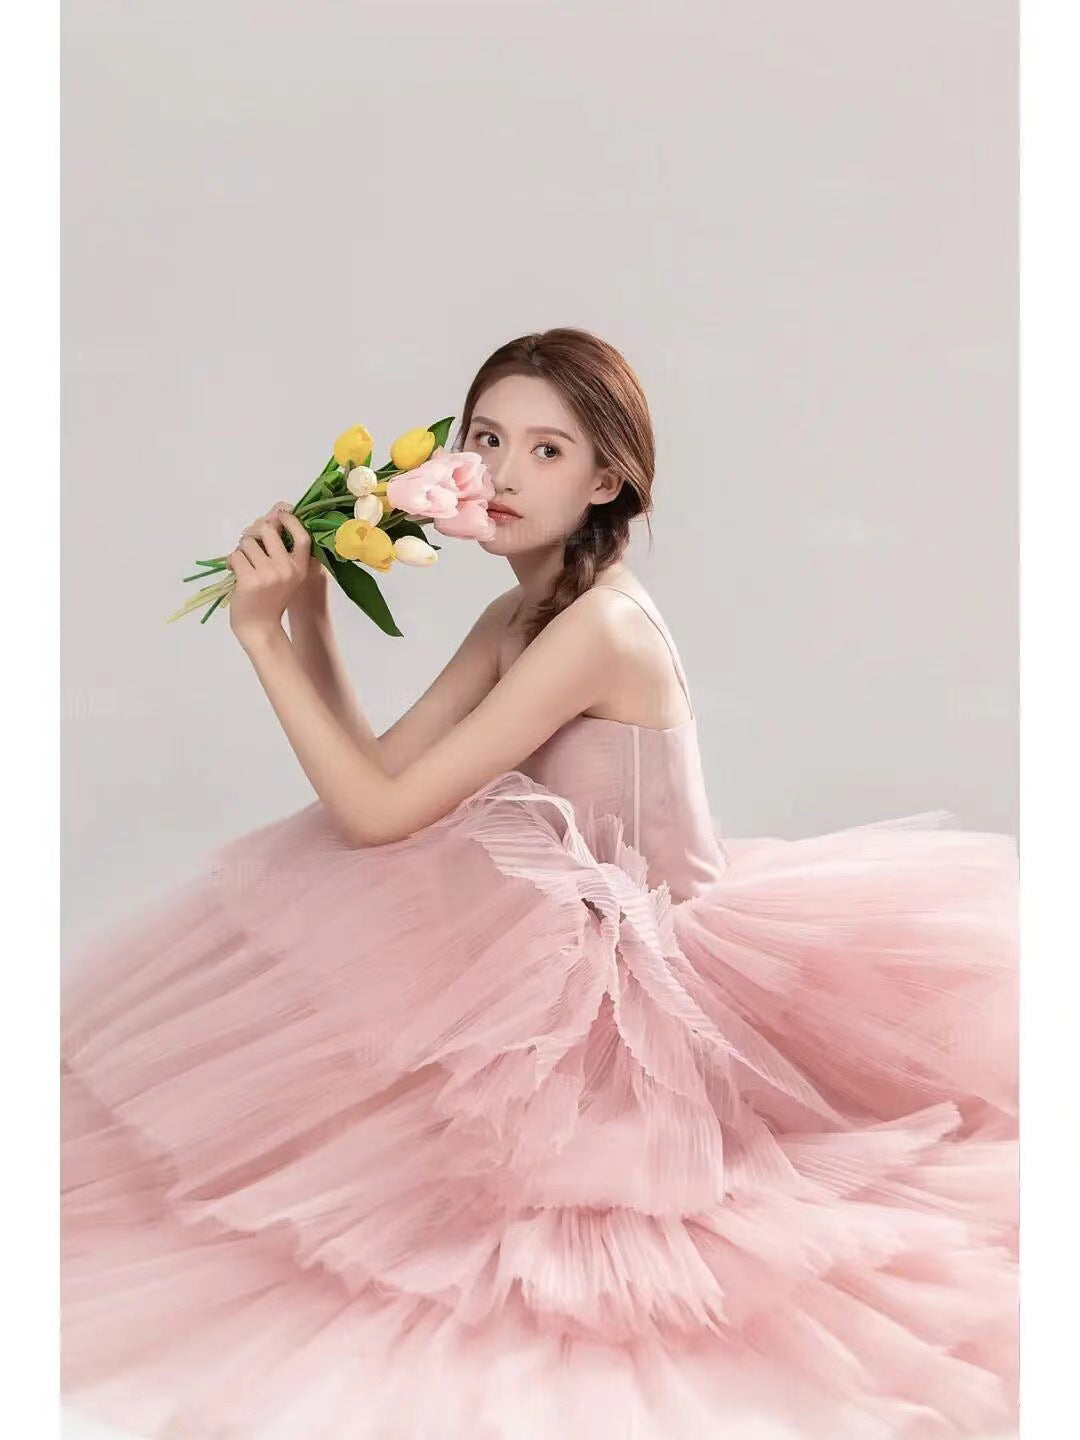 Elegant Girl's Wedding Photography Dress Pink White